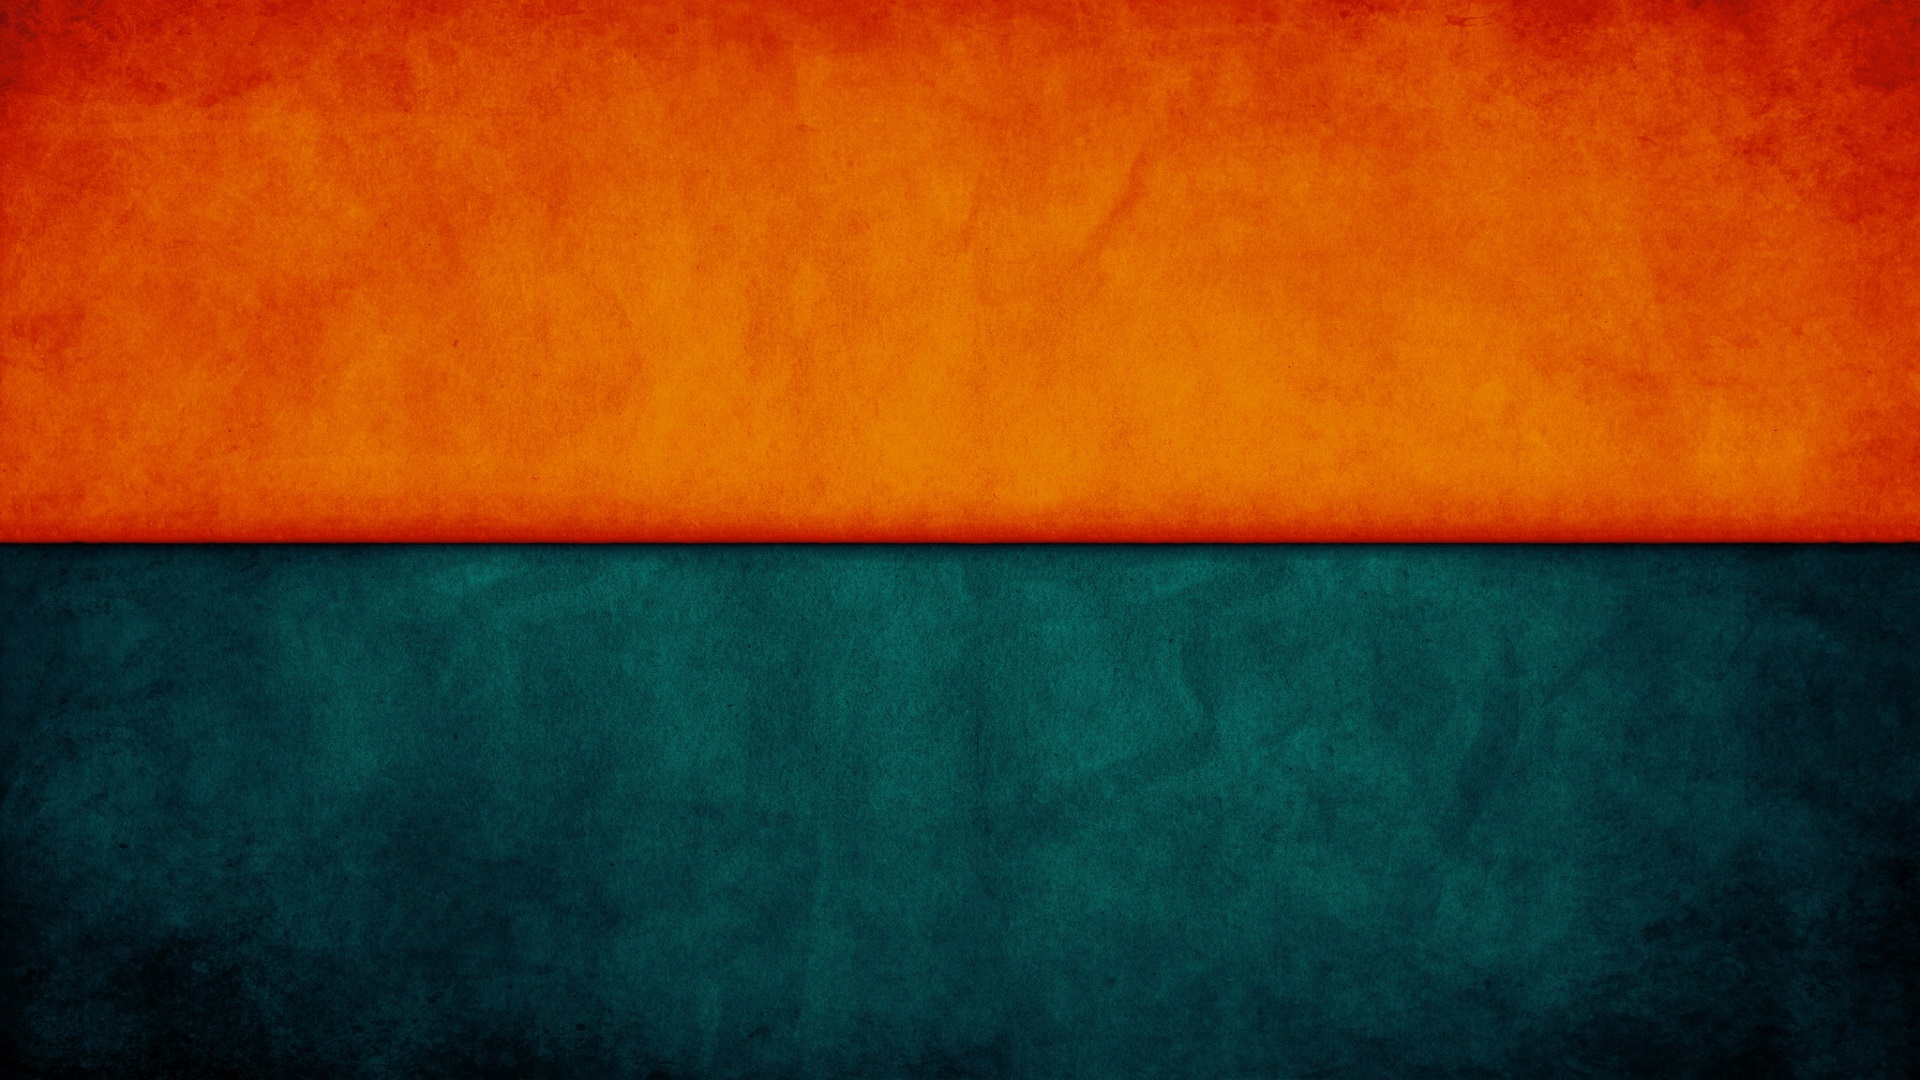 ipad wallpaper retina,orange,green,red,blue,turquoise